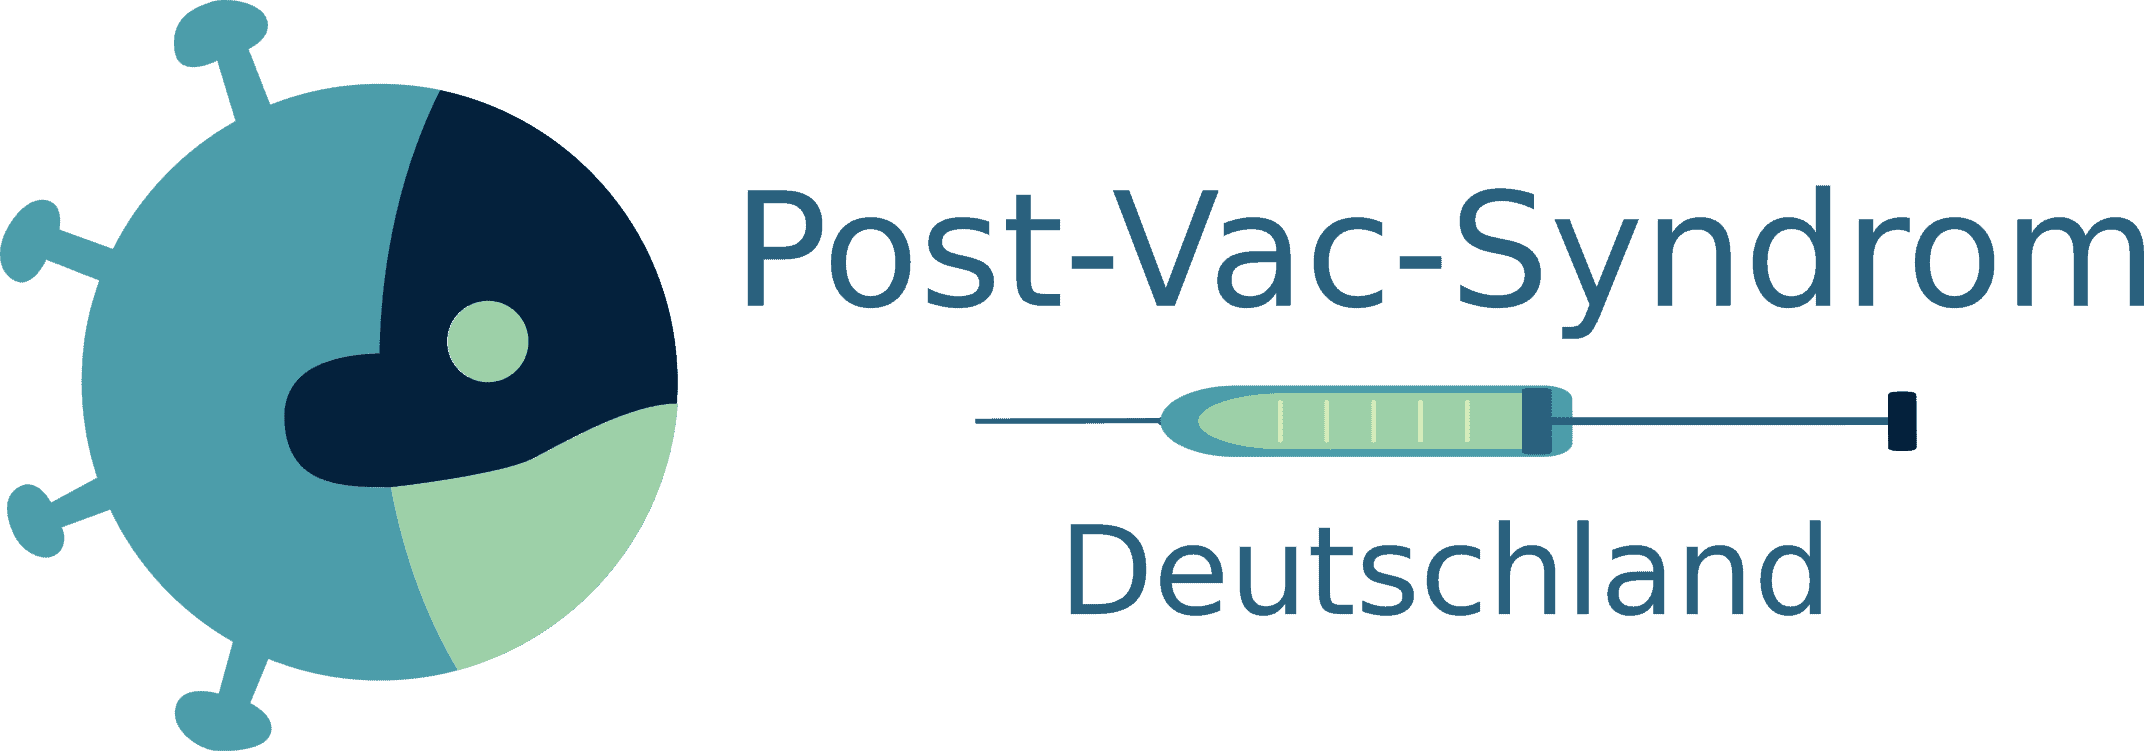 Post Vac Syndrom Deutschland Logo